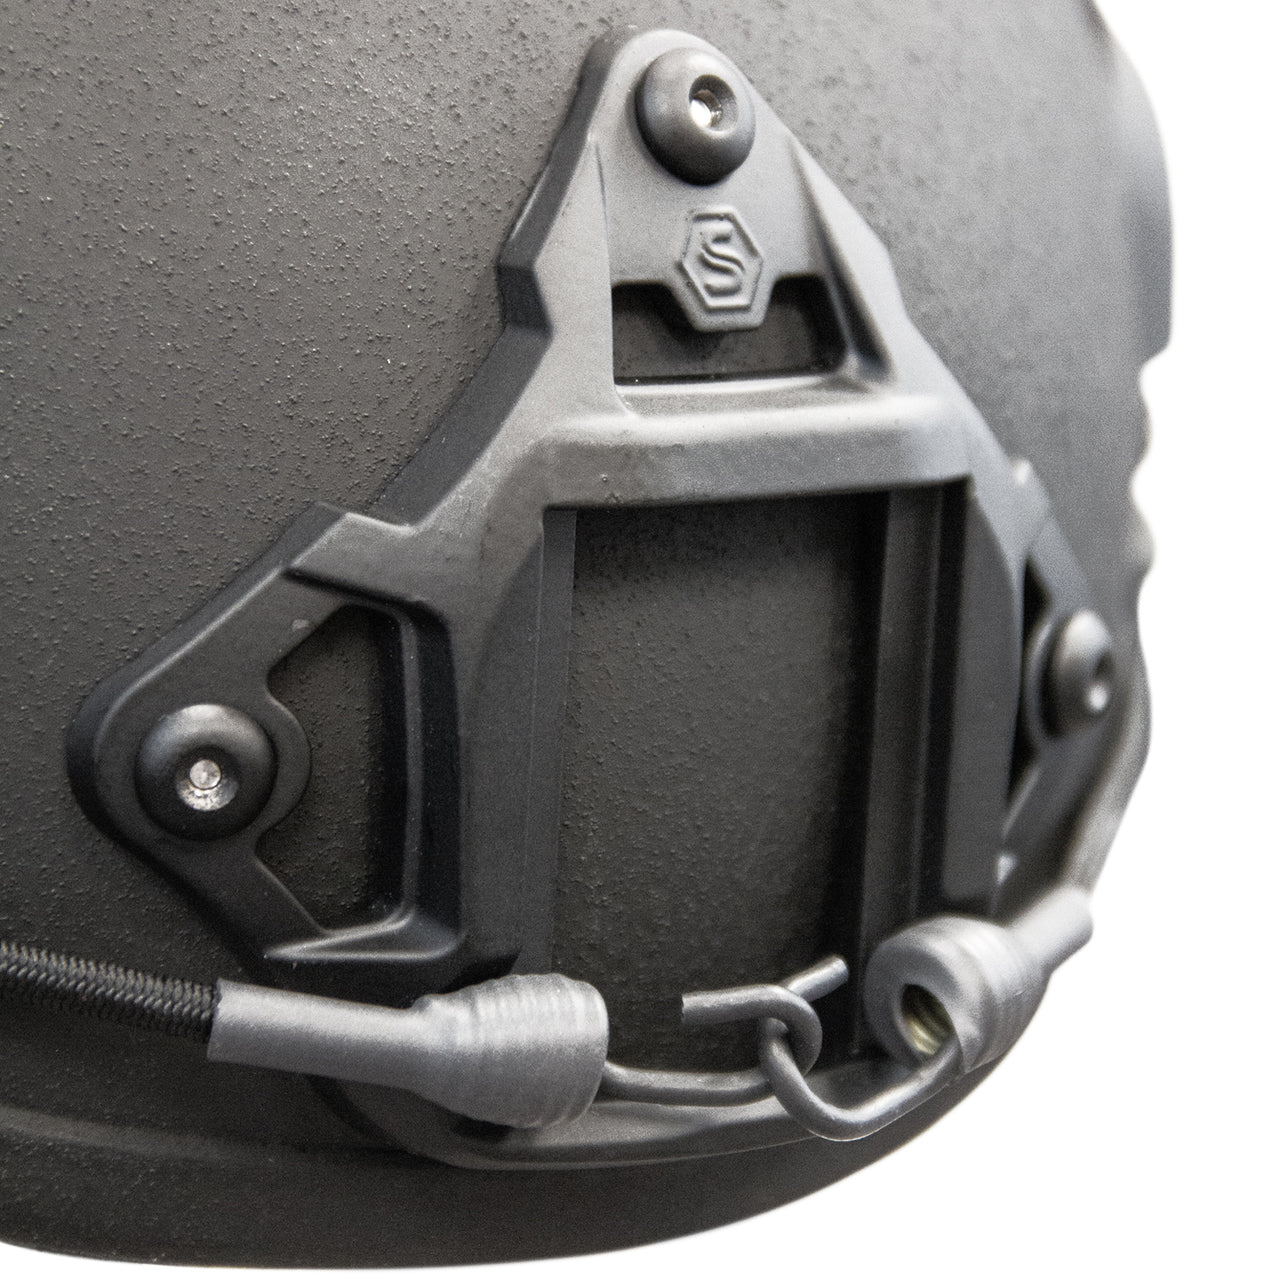 Shellback Tactical Level IIIA High-Cut SF ACH Ballistic Helmet